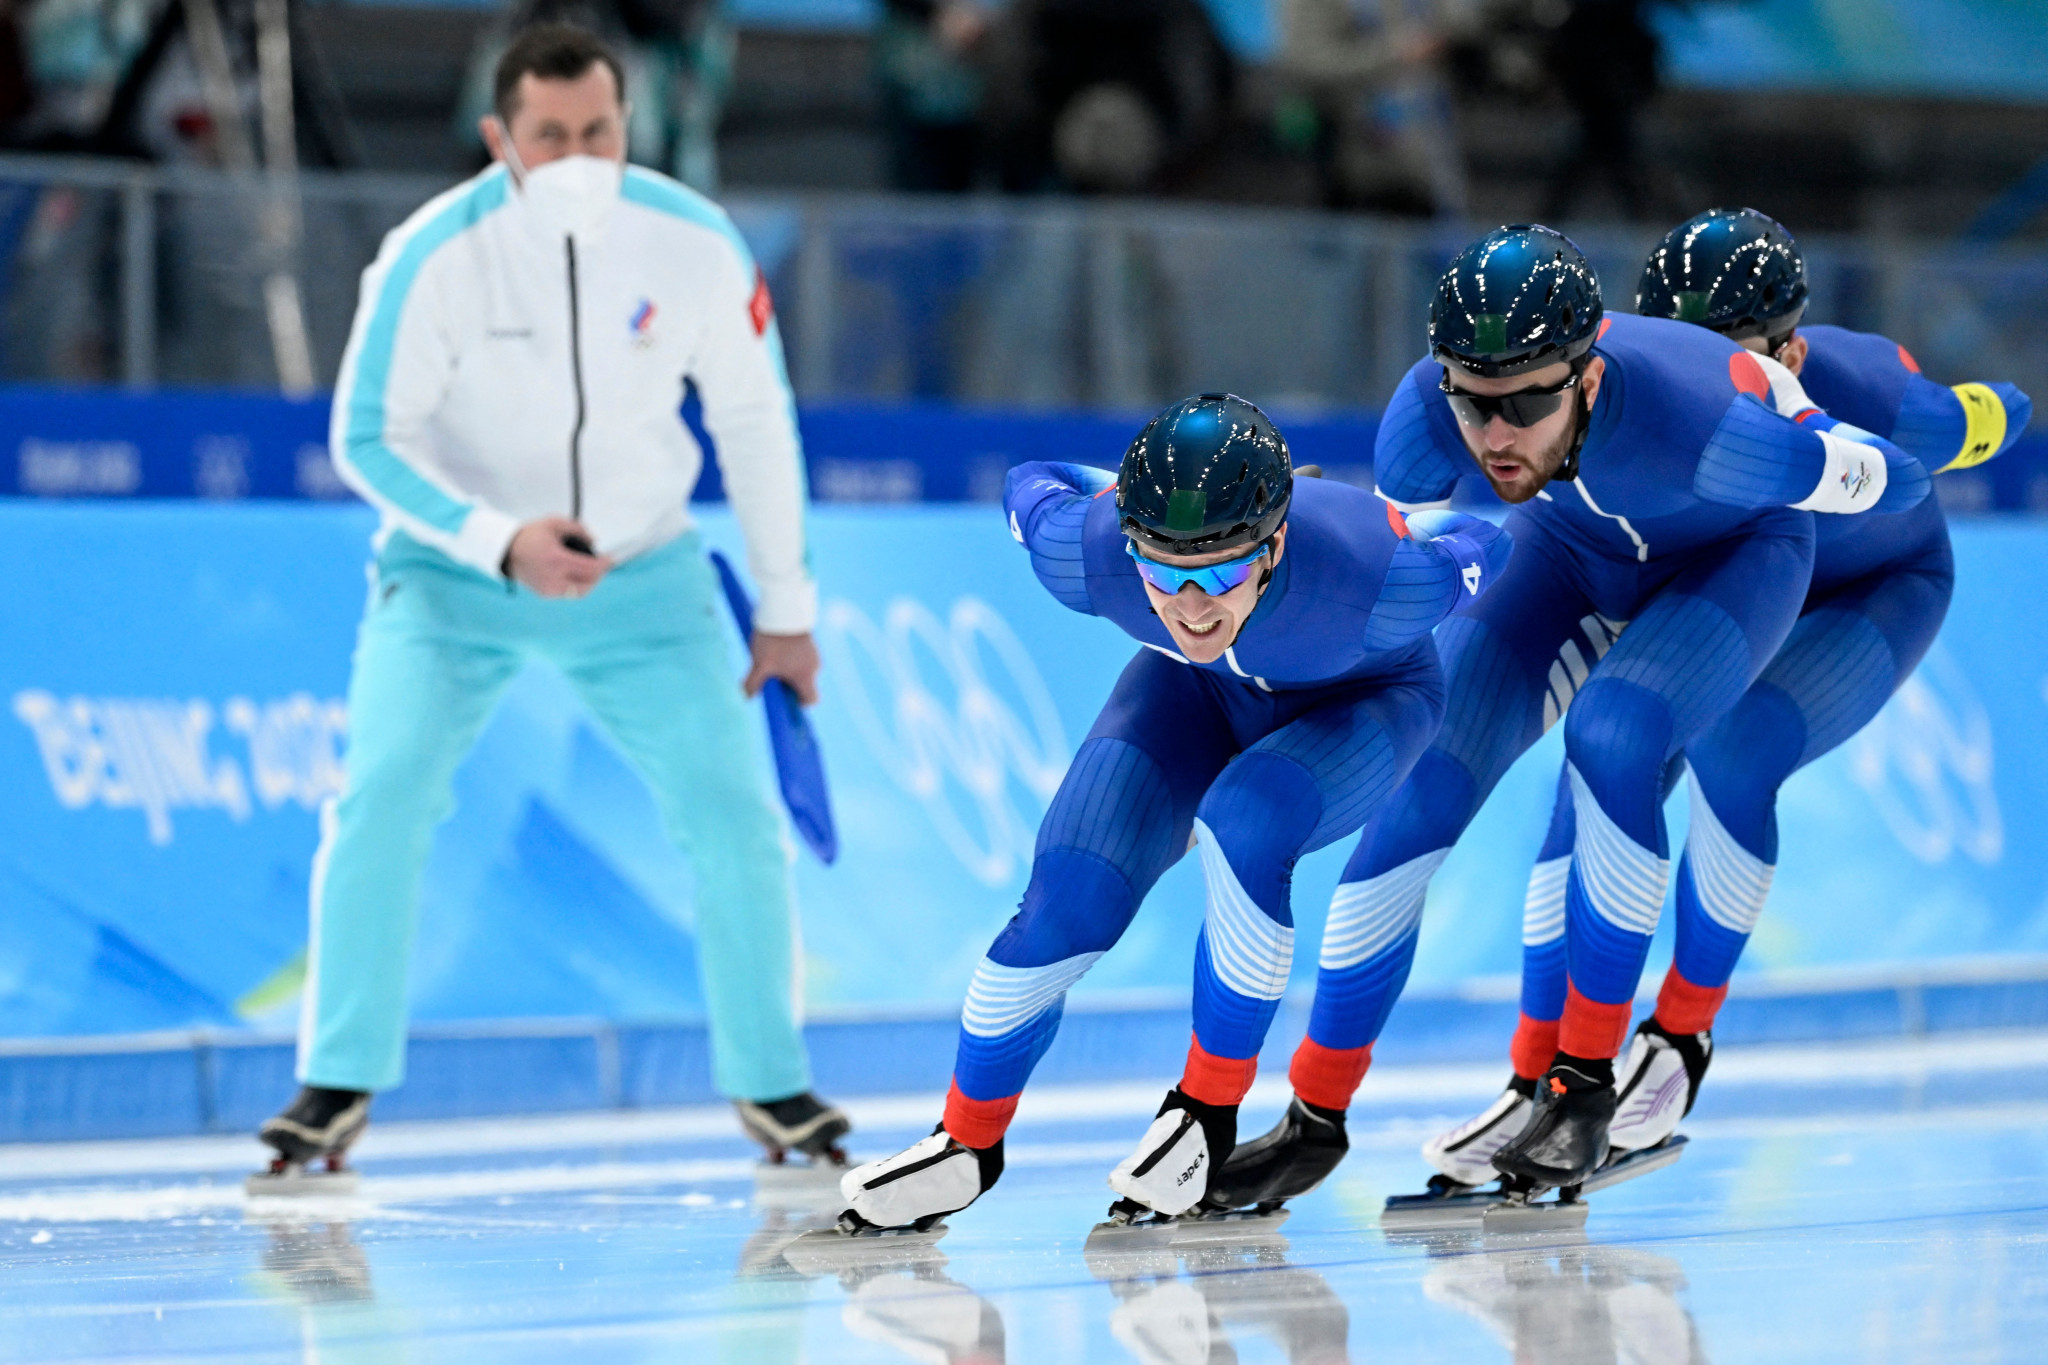 European Speed Skating Championships set to take place in Russia postponed 